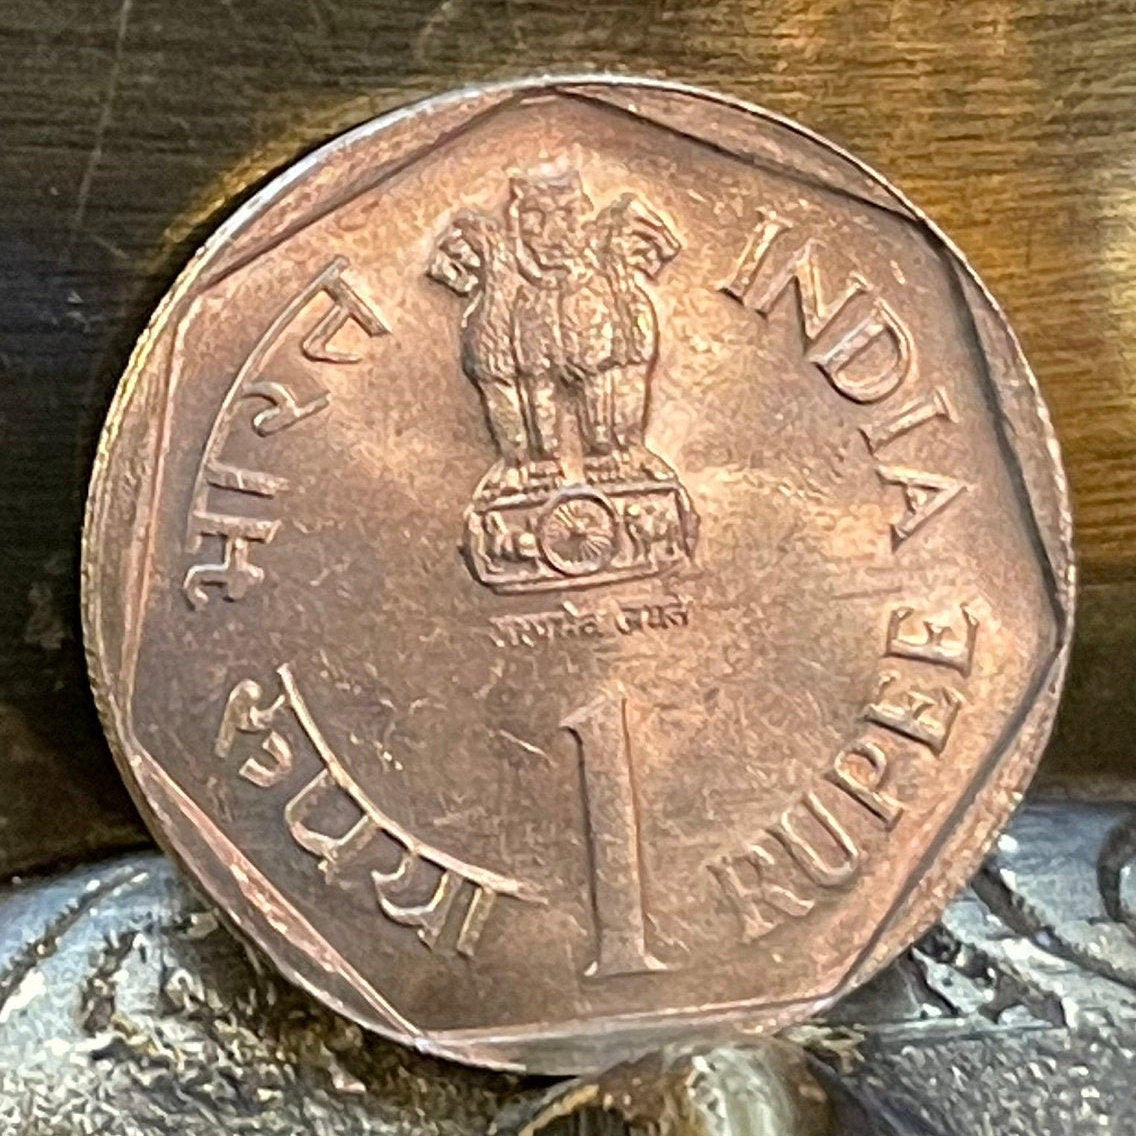 Ashoka Lion Capitol 1 Rupee India Authentic Coin Money for Jewelry and Craft Making (Rainfed Farming) FAO